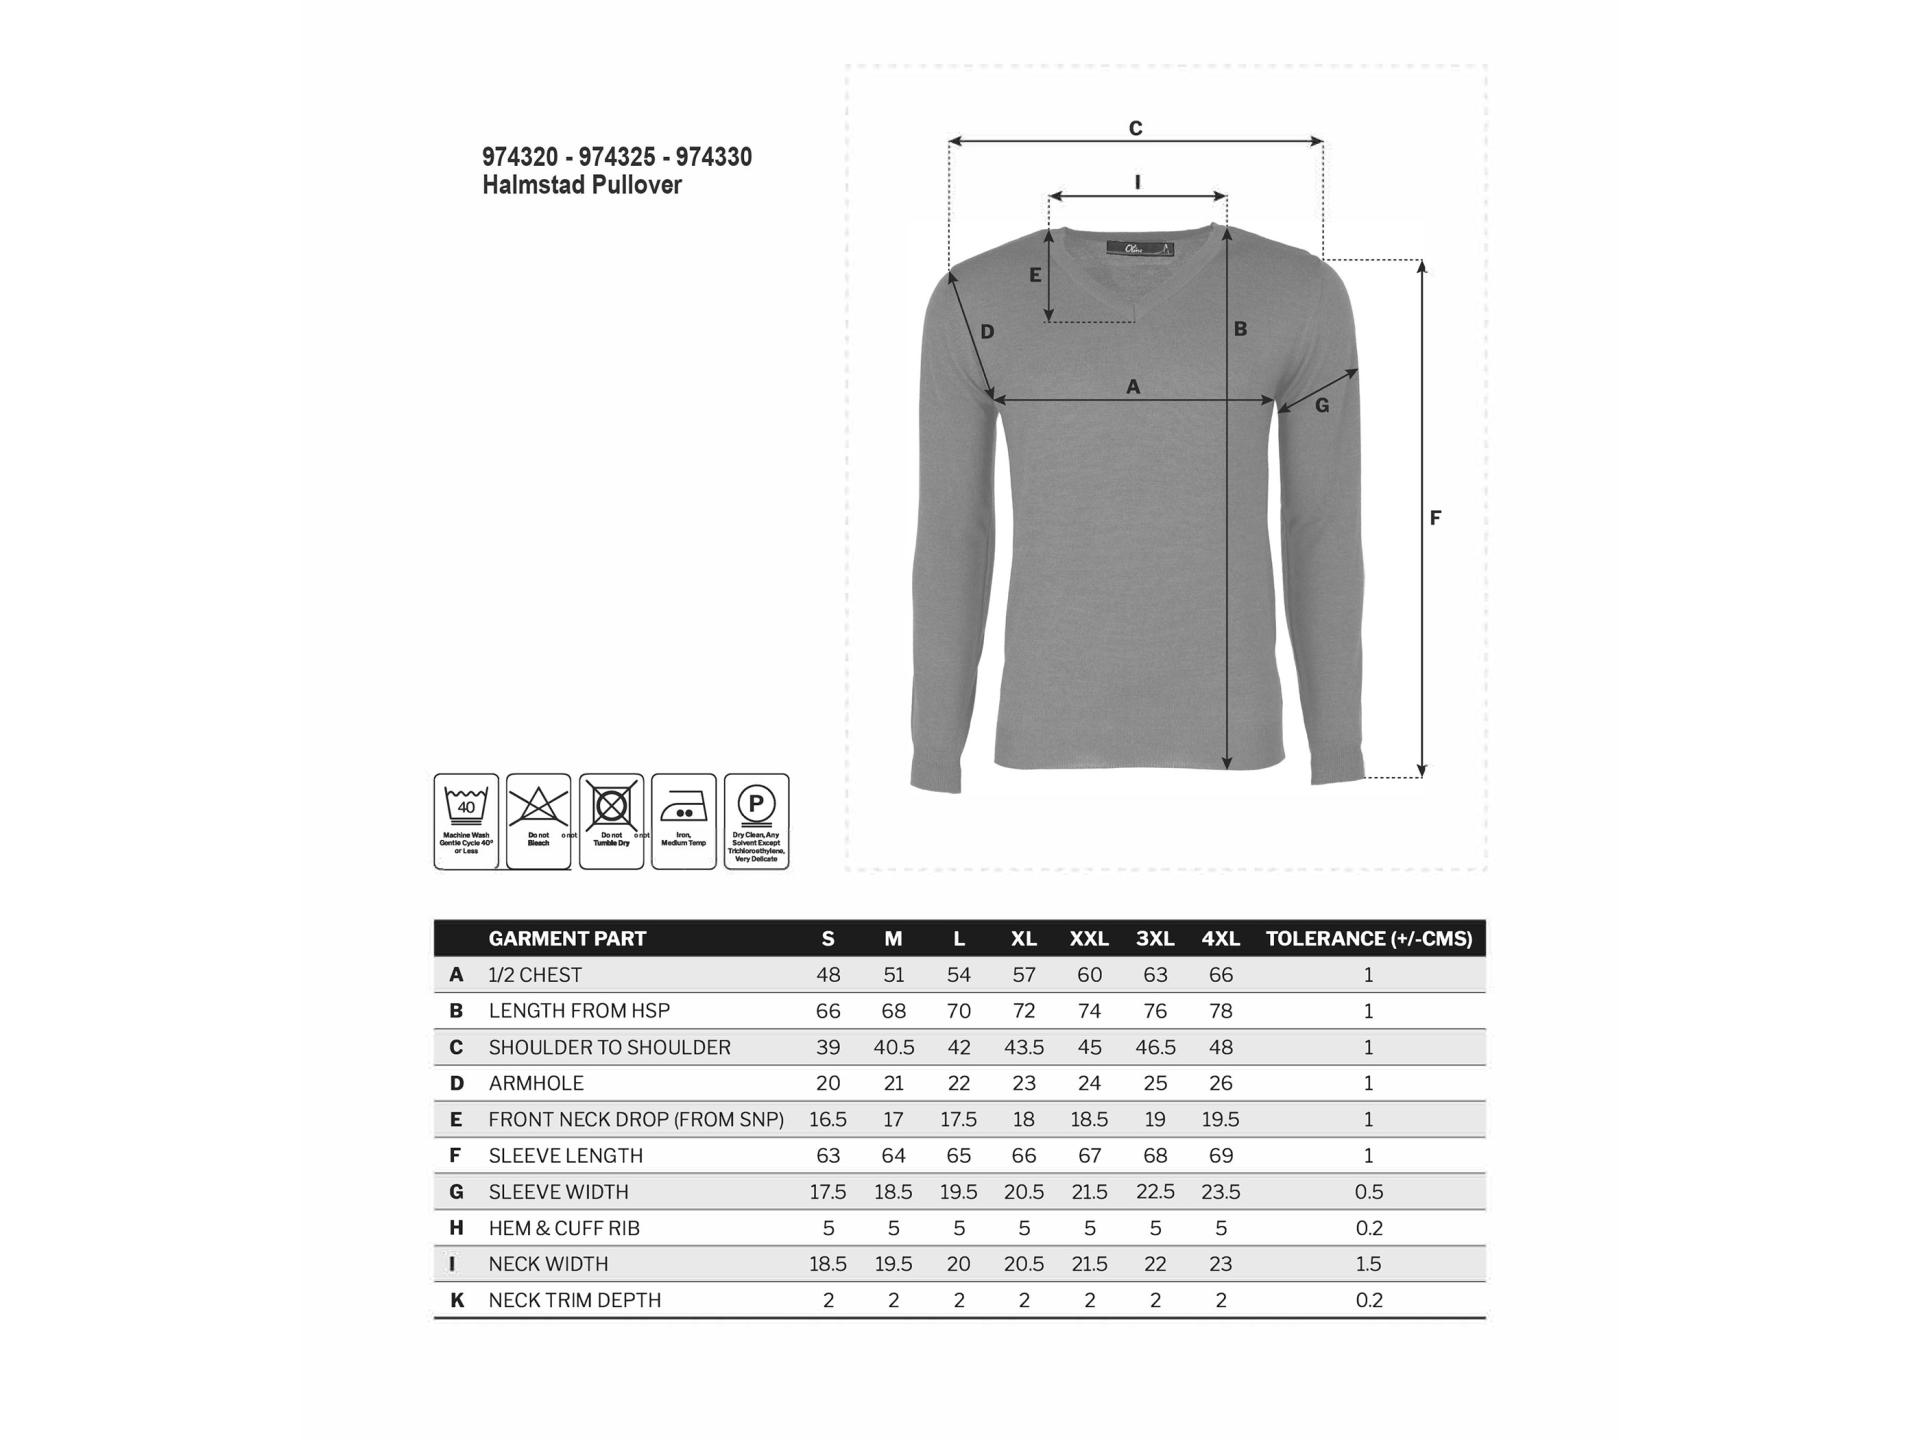 Size guide for uniform pullover for men